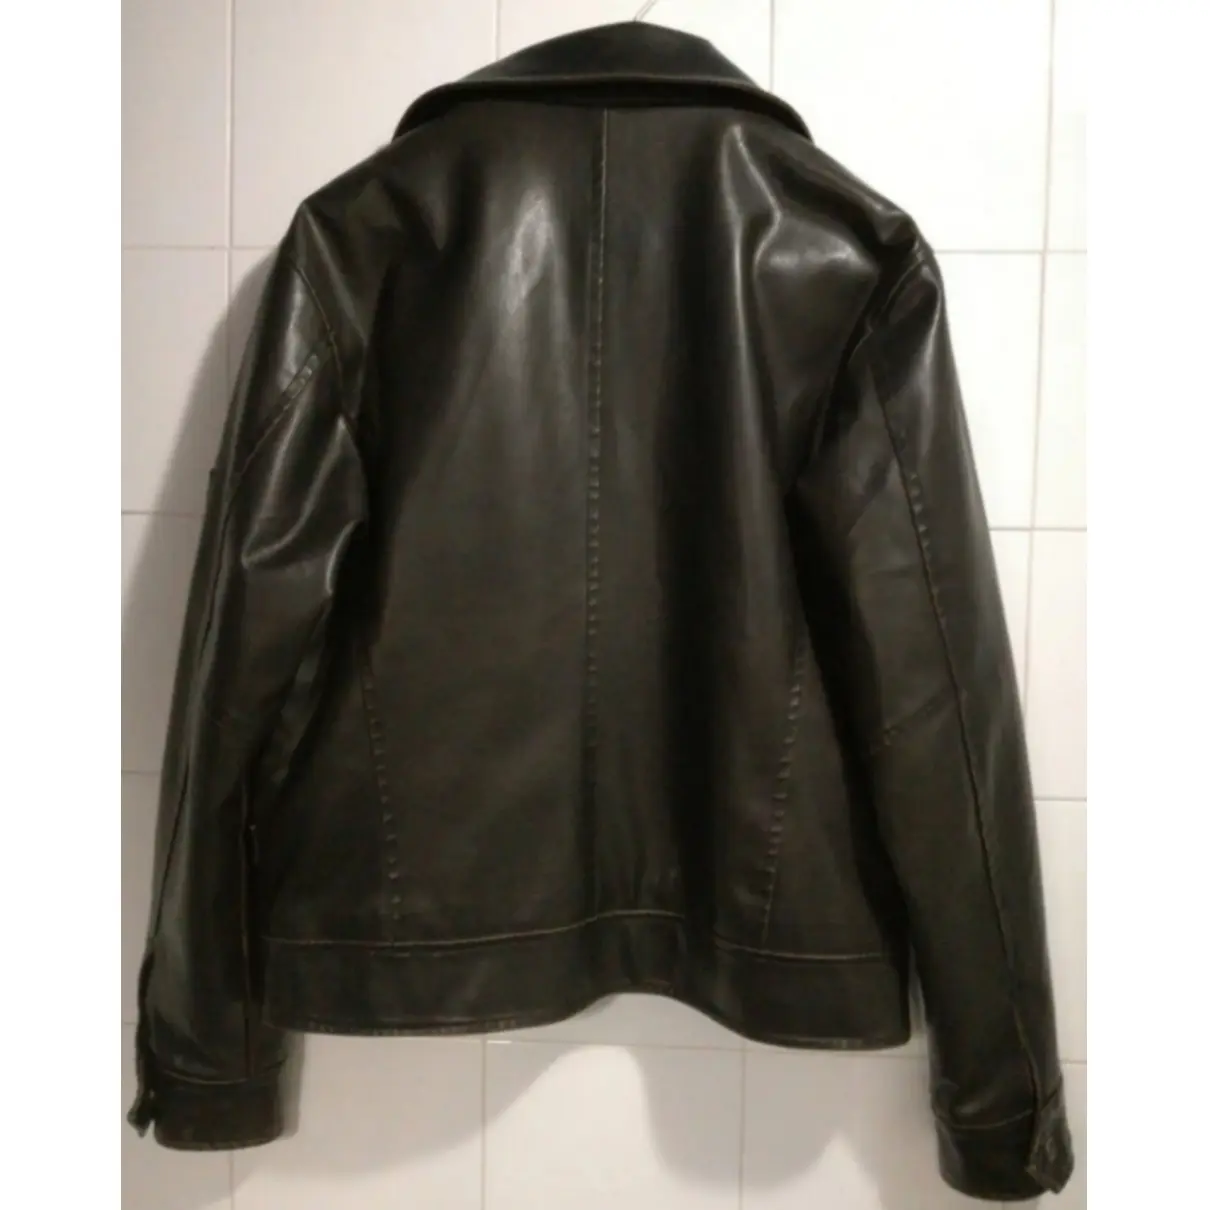 Buy Armani Jeans Leather jacket online